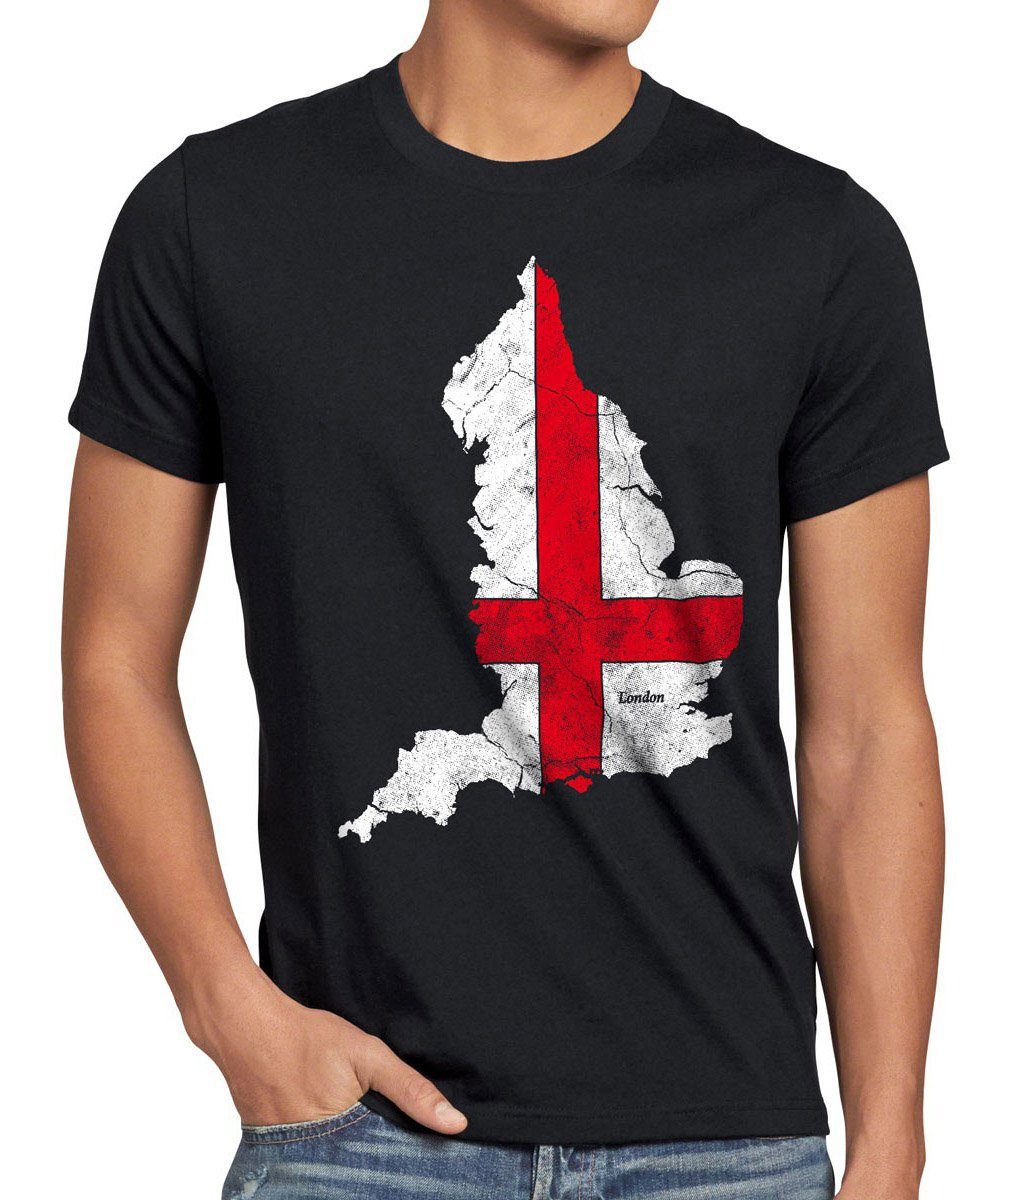 Great Vintage Herren London style3 Flagge brexit soccer England Print-Shirt T-Shirt Flag UK Britain